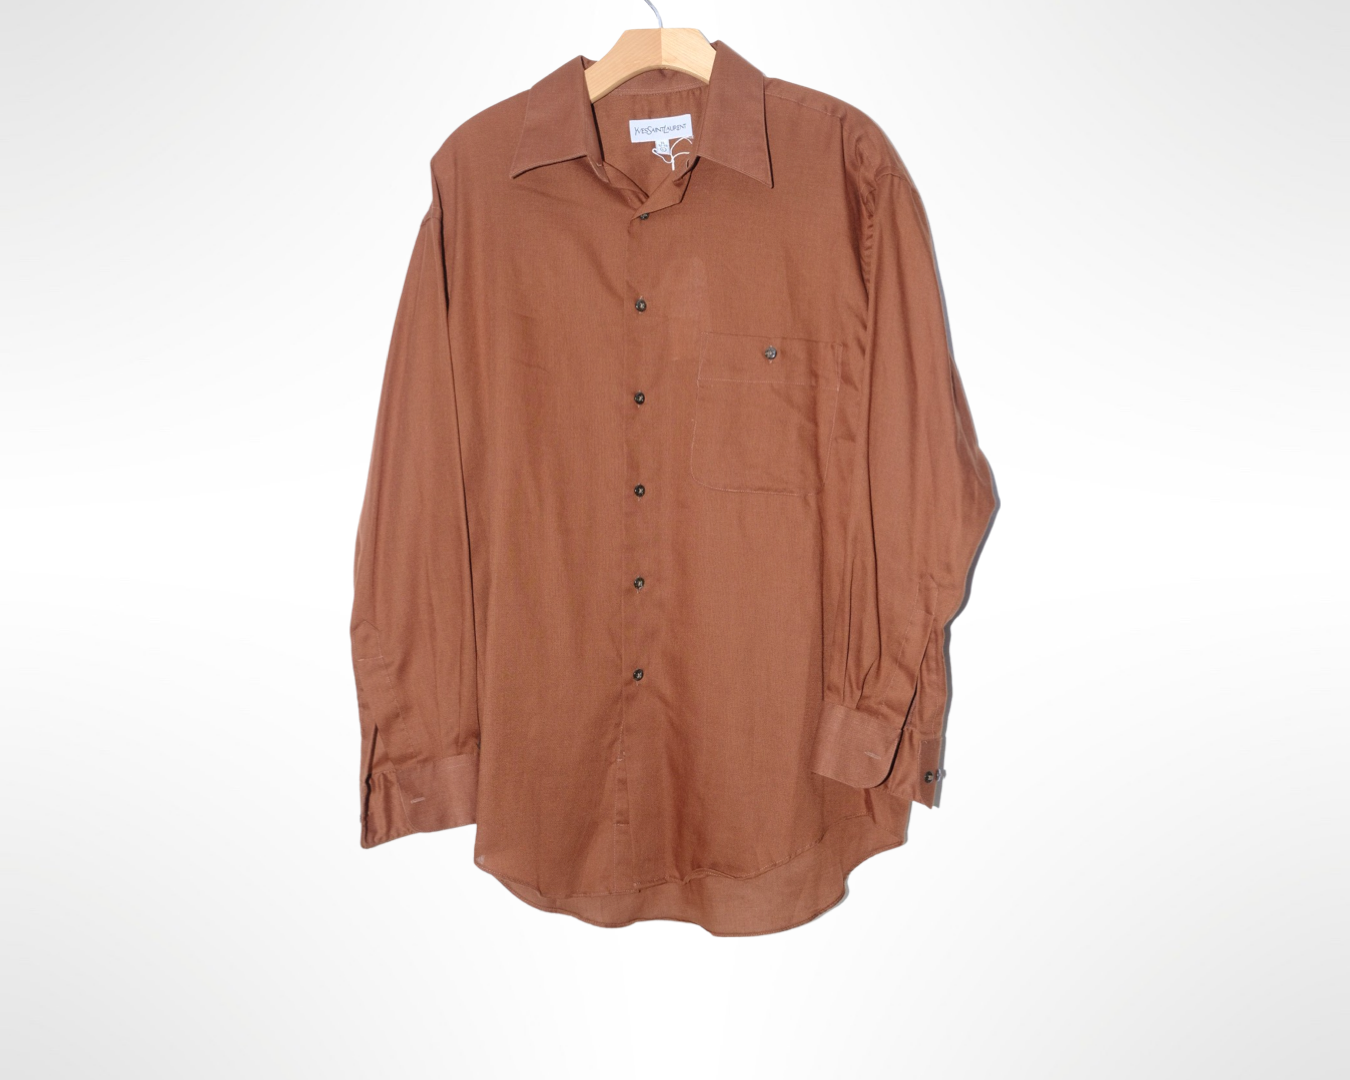 ysl brown button up shirt